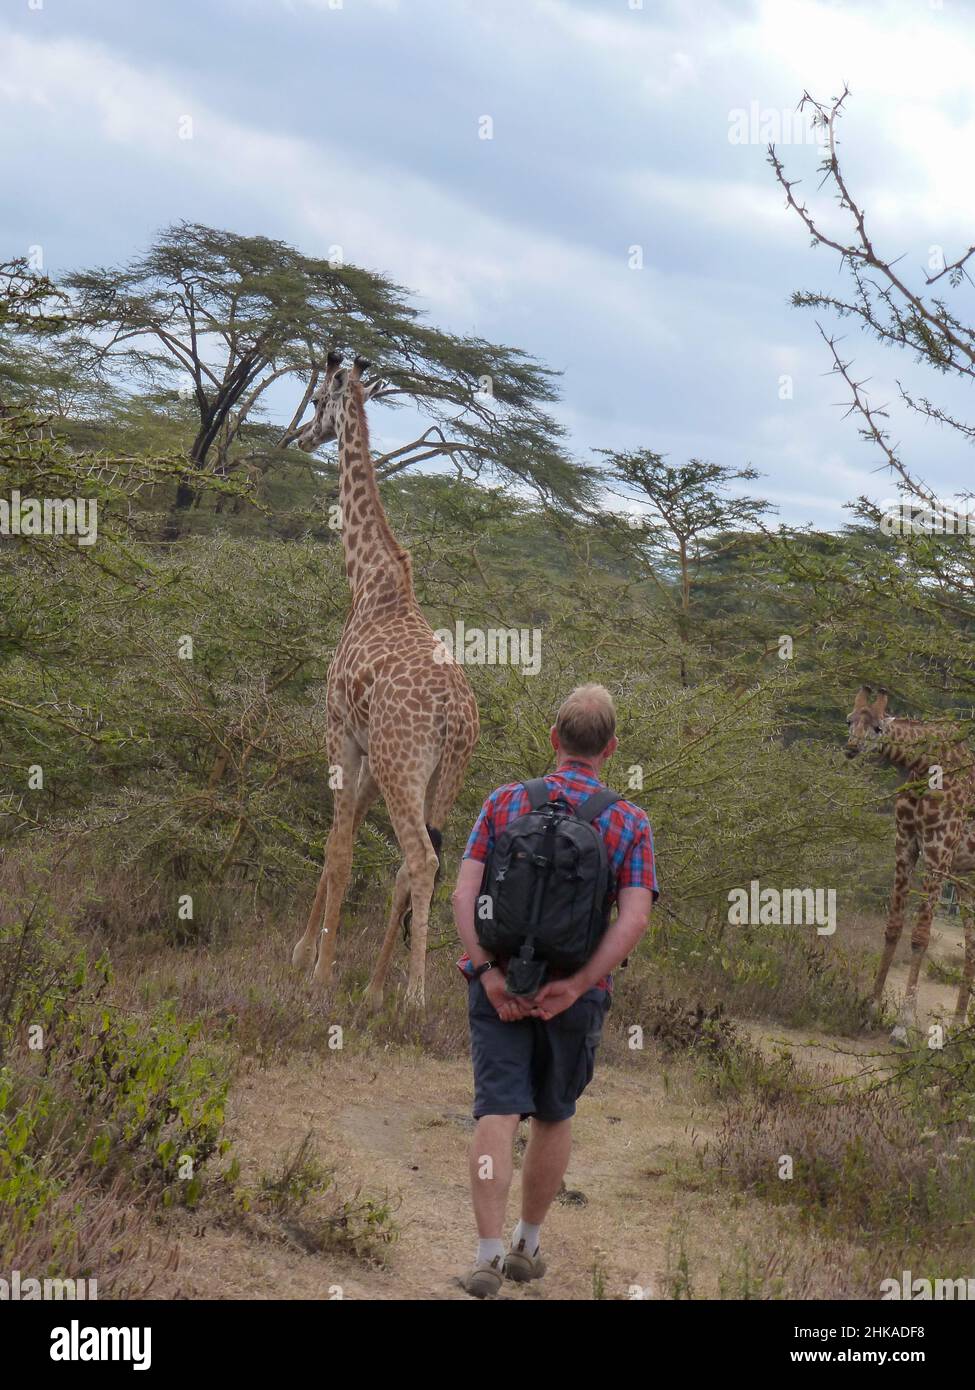 tourist and giraffe in park in Kenya Stock Photo